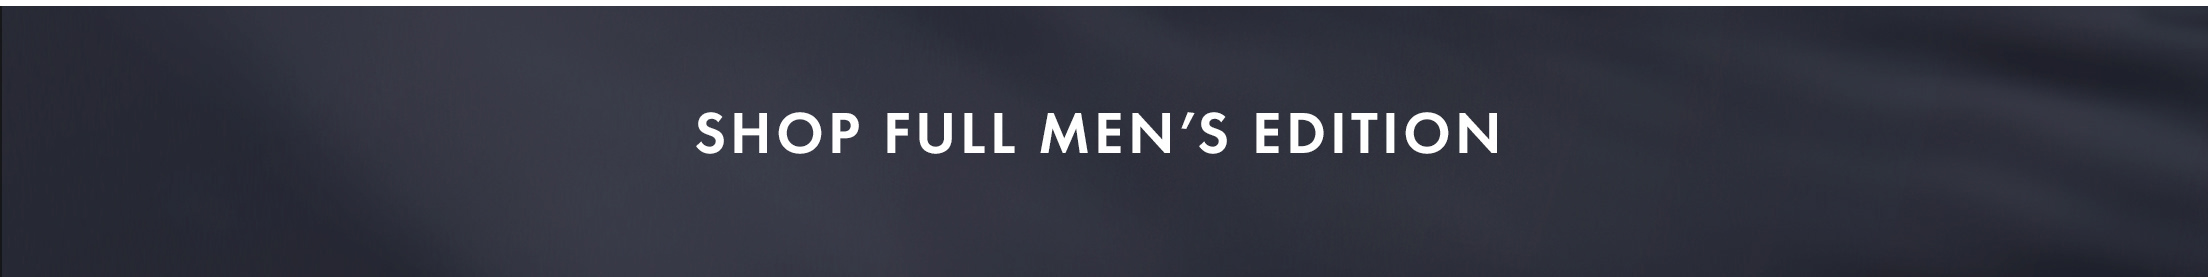 Shop Full Men's Edition